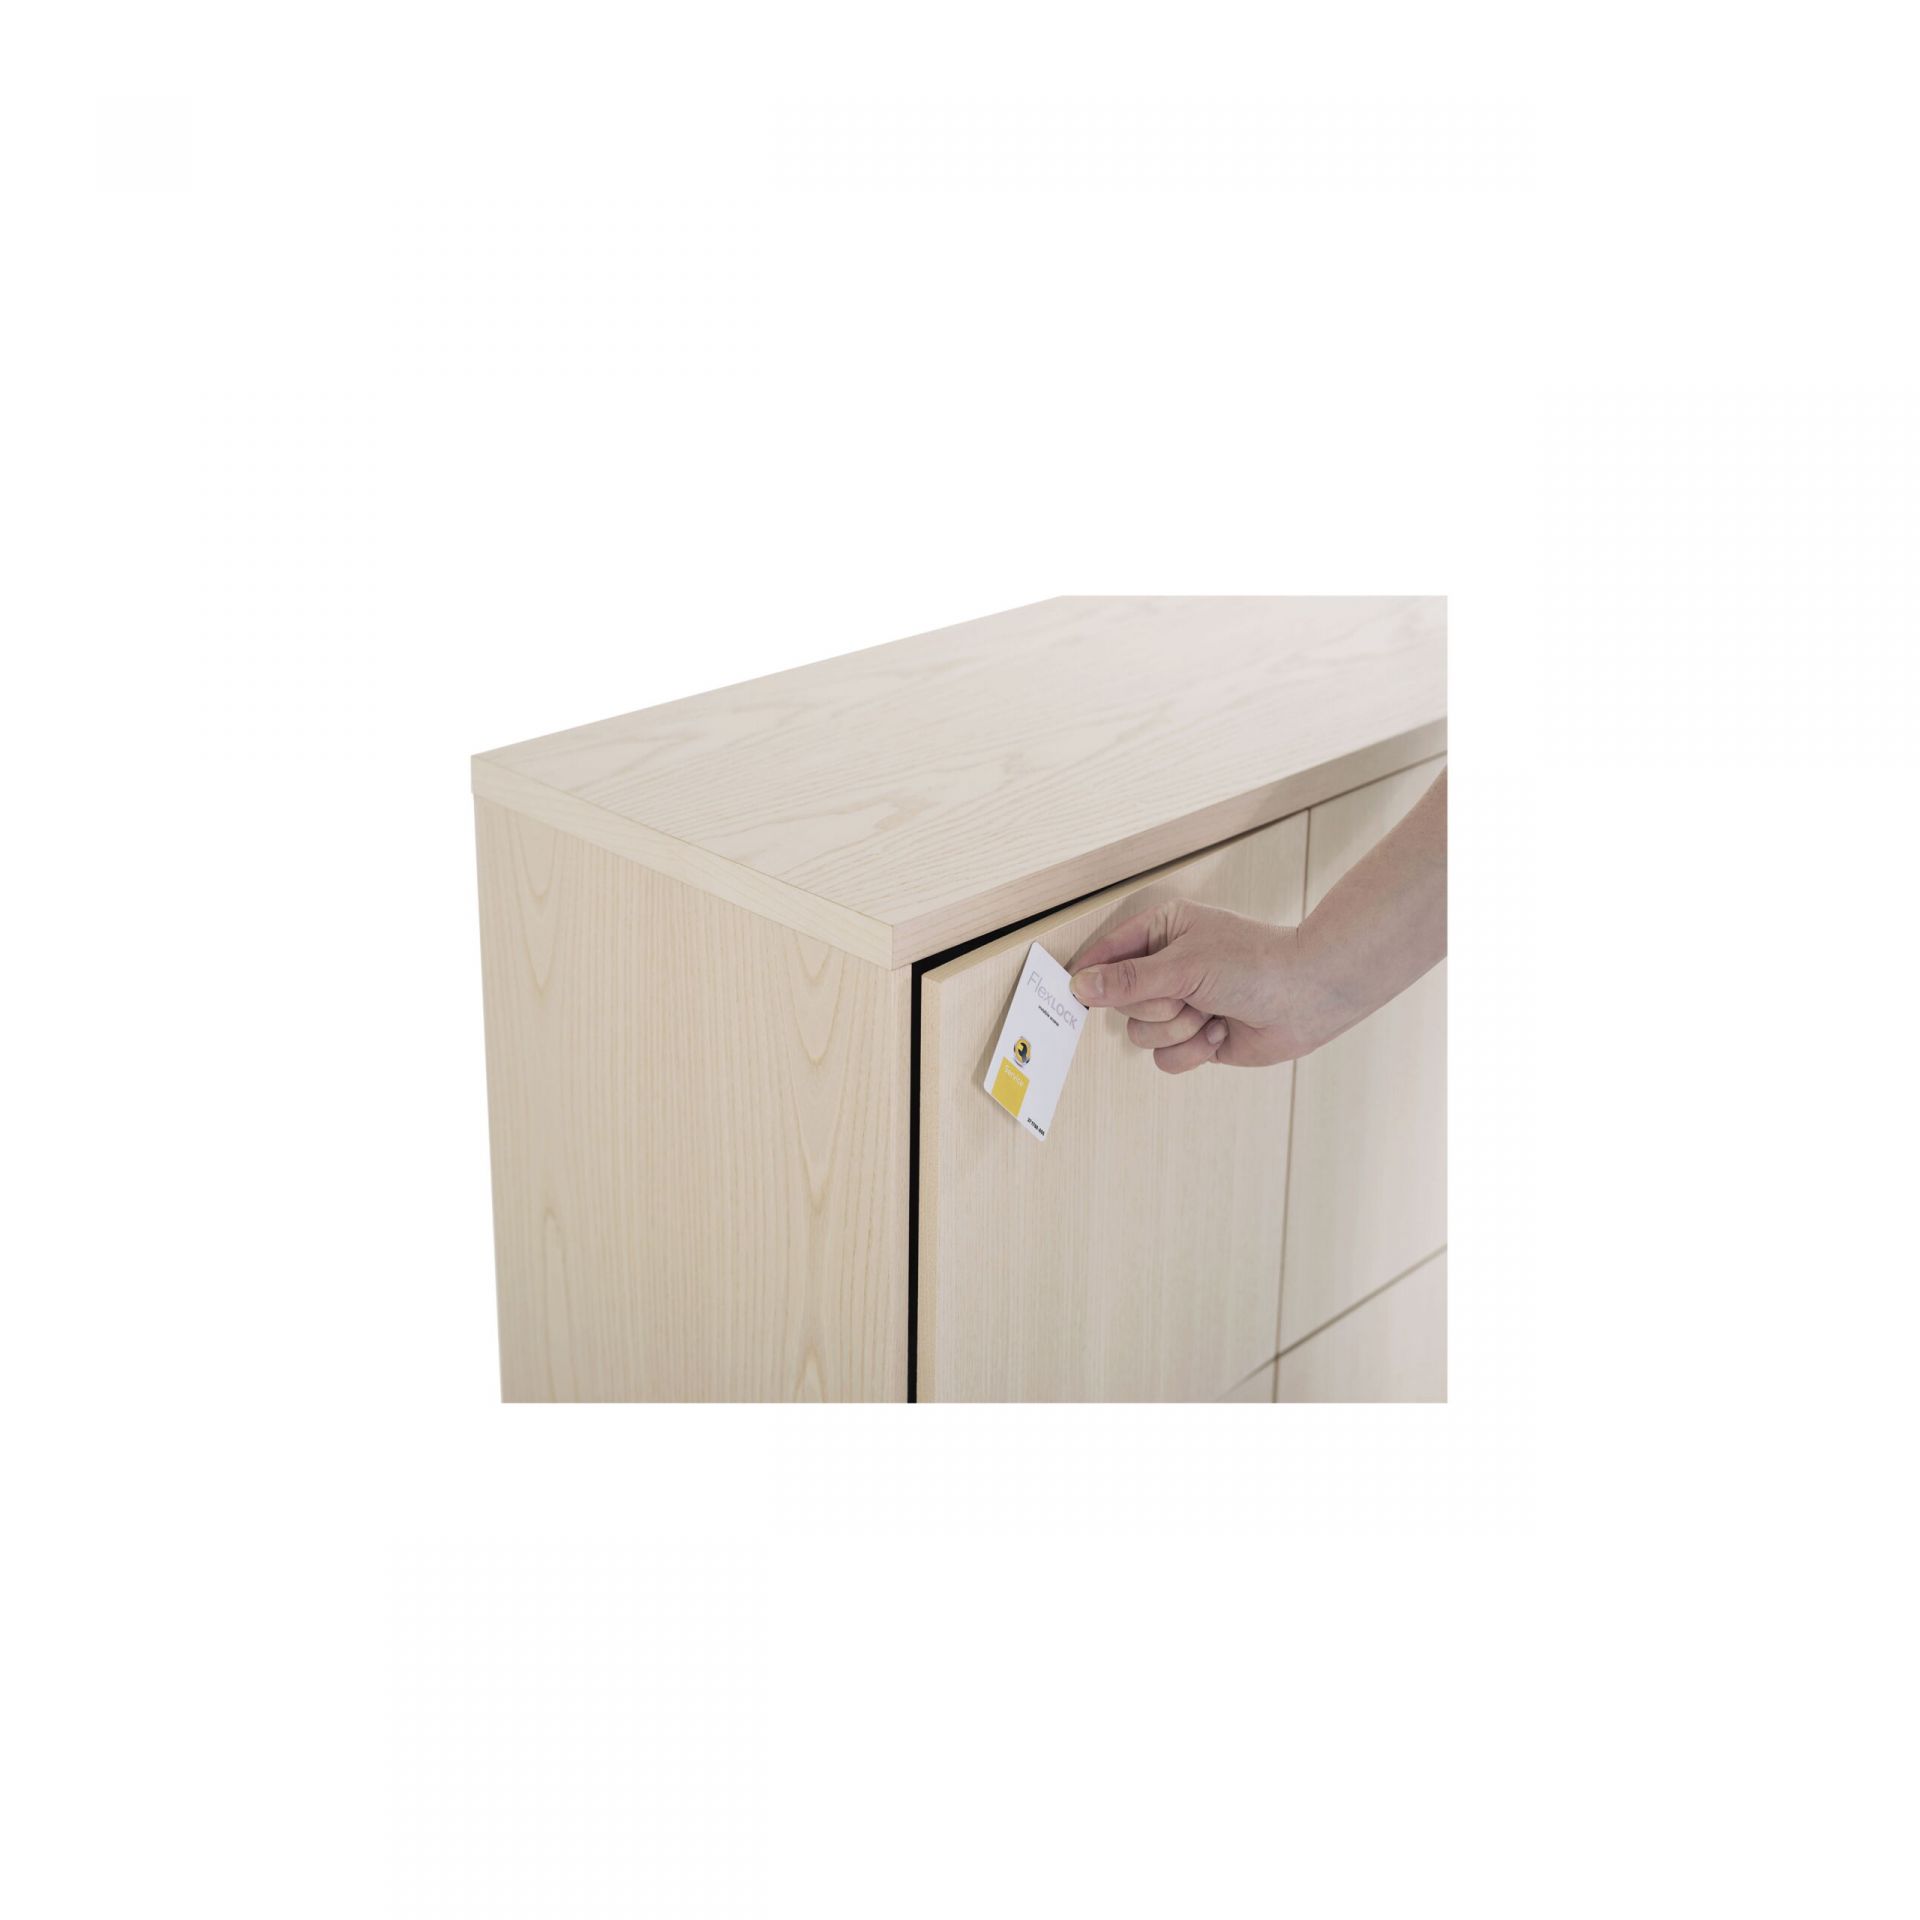 Pulse Personal locker product image 4